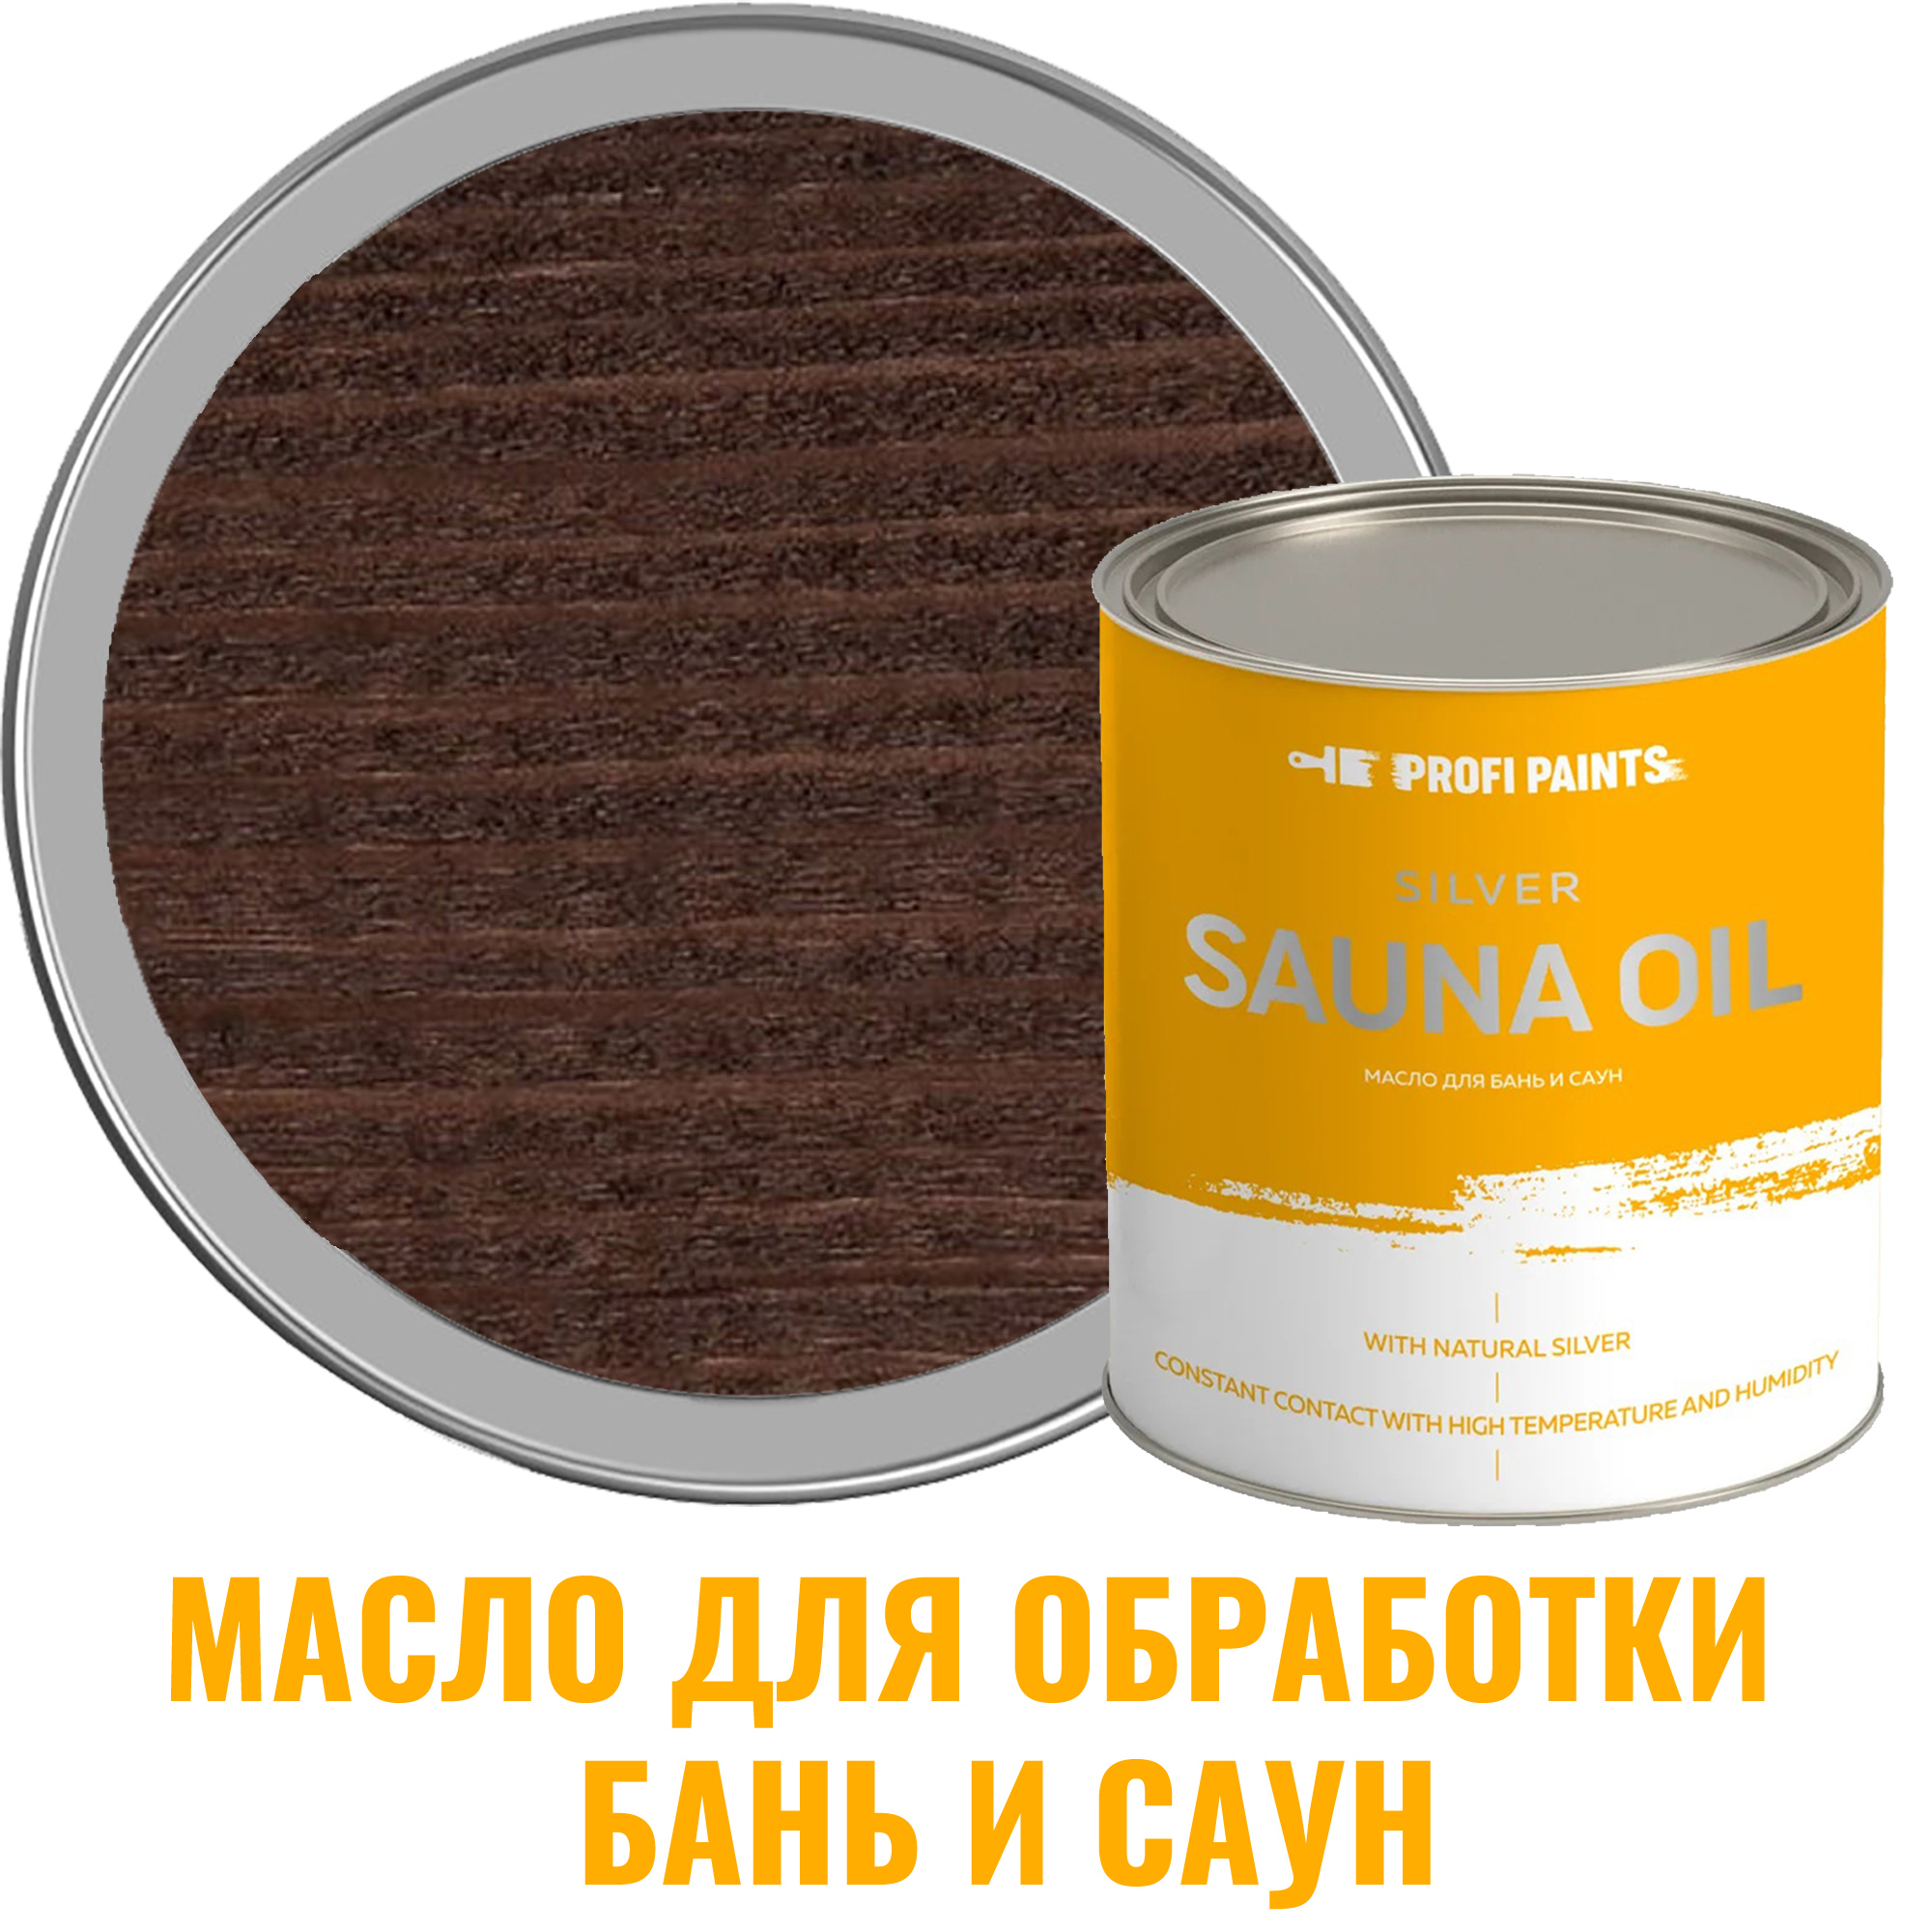 91095349 Масло для бань и саун 10785_D Silver Sauna Oil цвет палисандр 0.9 л STLM-0481713 PROFIPAINTS